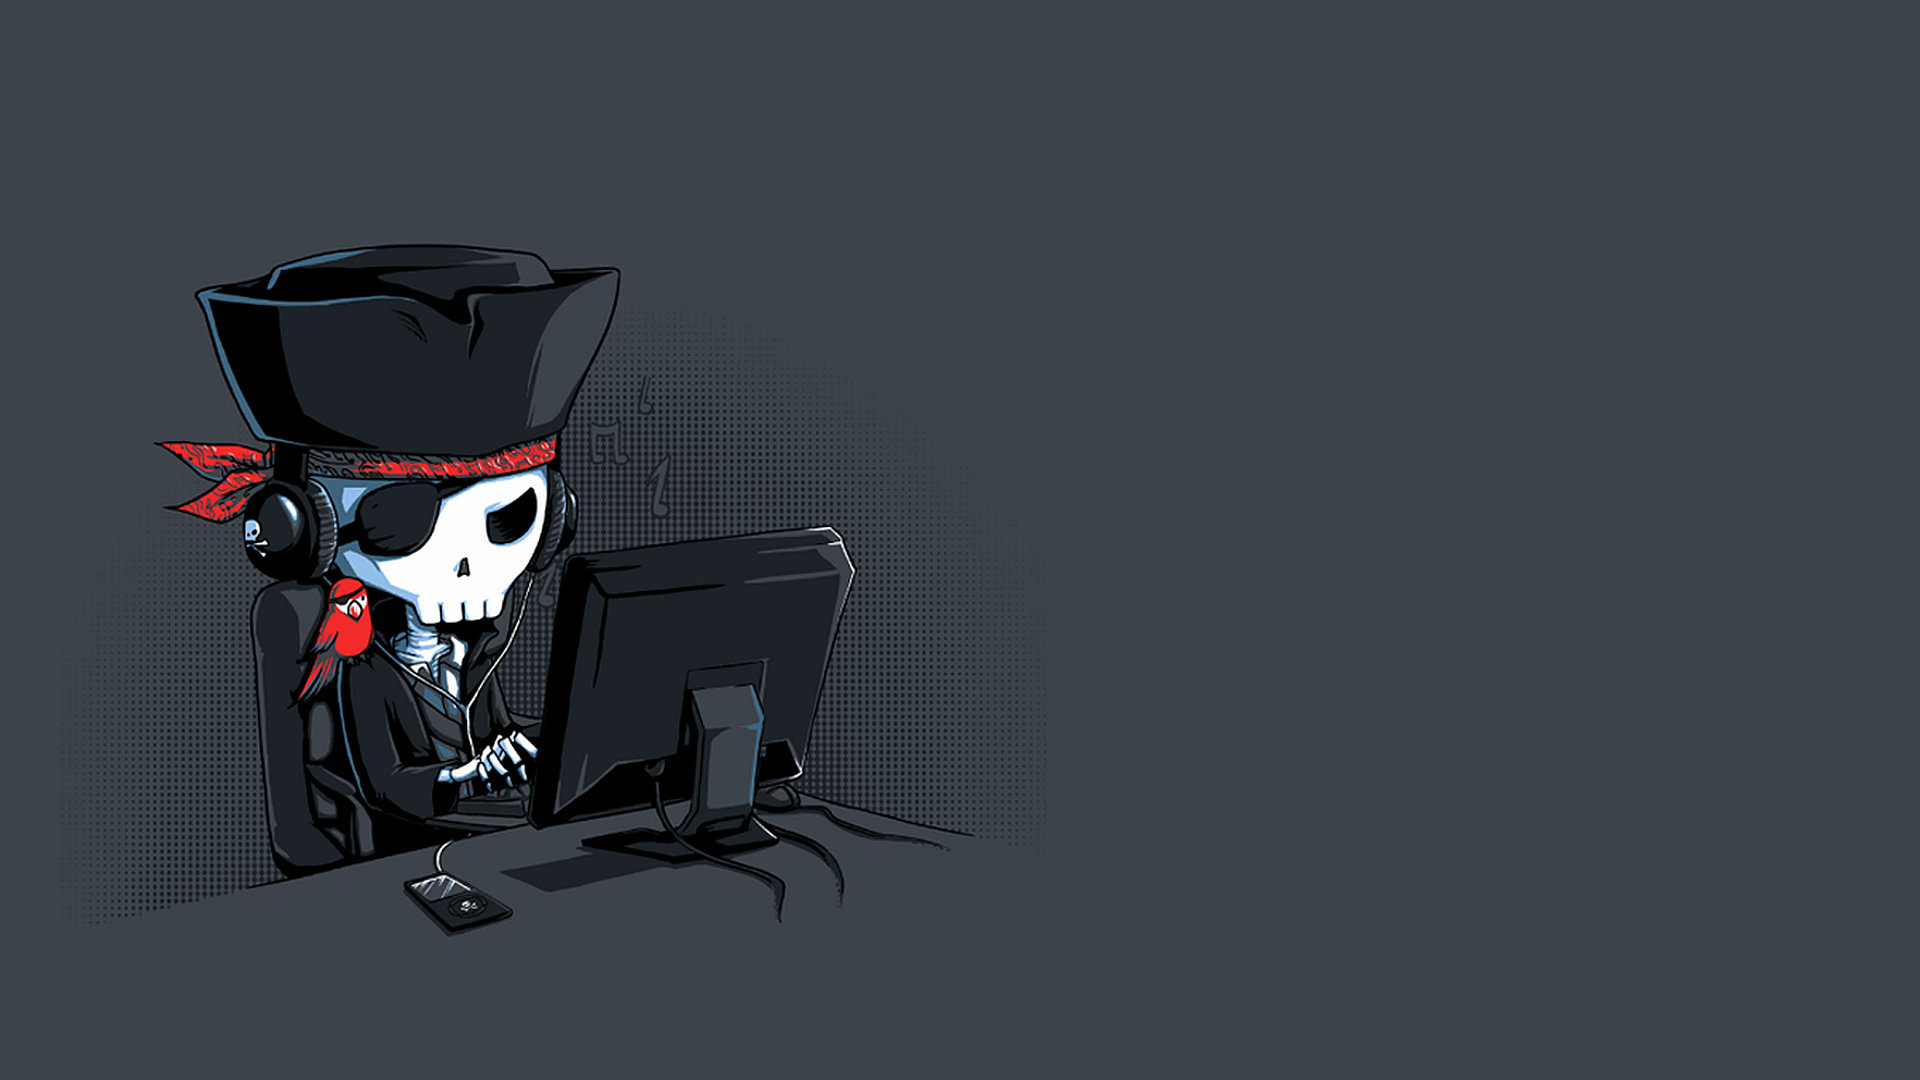 General 1920x1080 pirates computer skeleton minimalism skull hacking simple background gray background eyepatches monitor